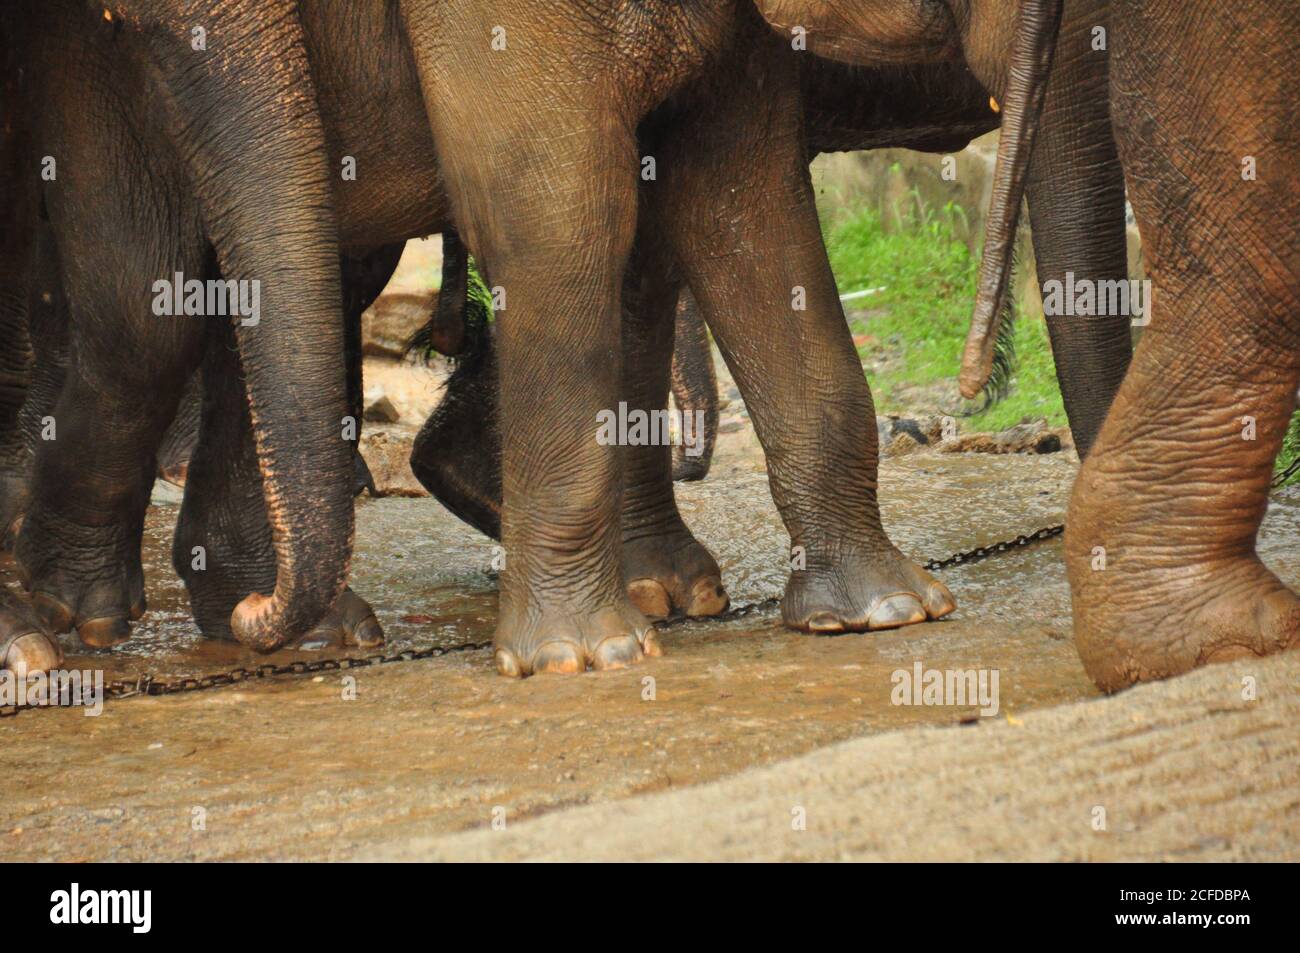 Sri Lanka Elephant (Elephas maximus maximus) Herde aus der Nähe vorgestellt, Wandern während der Regenzeit im Pinnawala Elephant Orphanage, Sri Lanka. Stockfoto